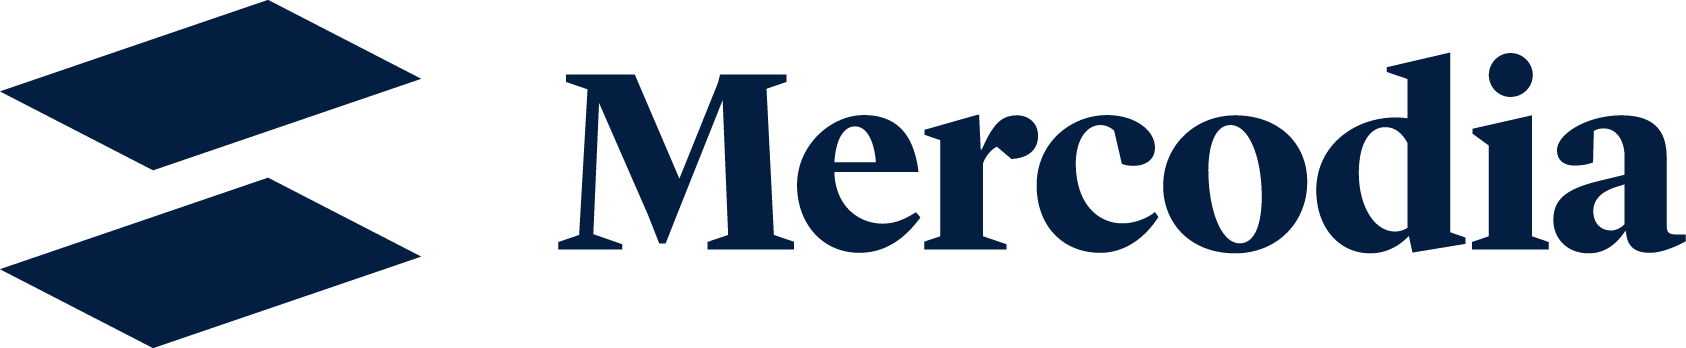 Mercodia logo